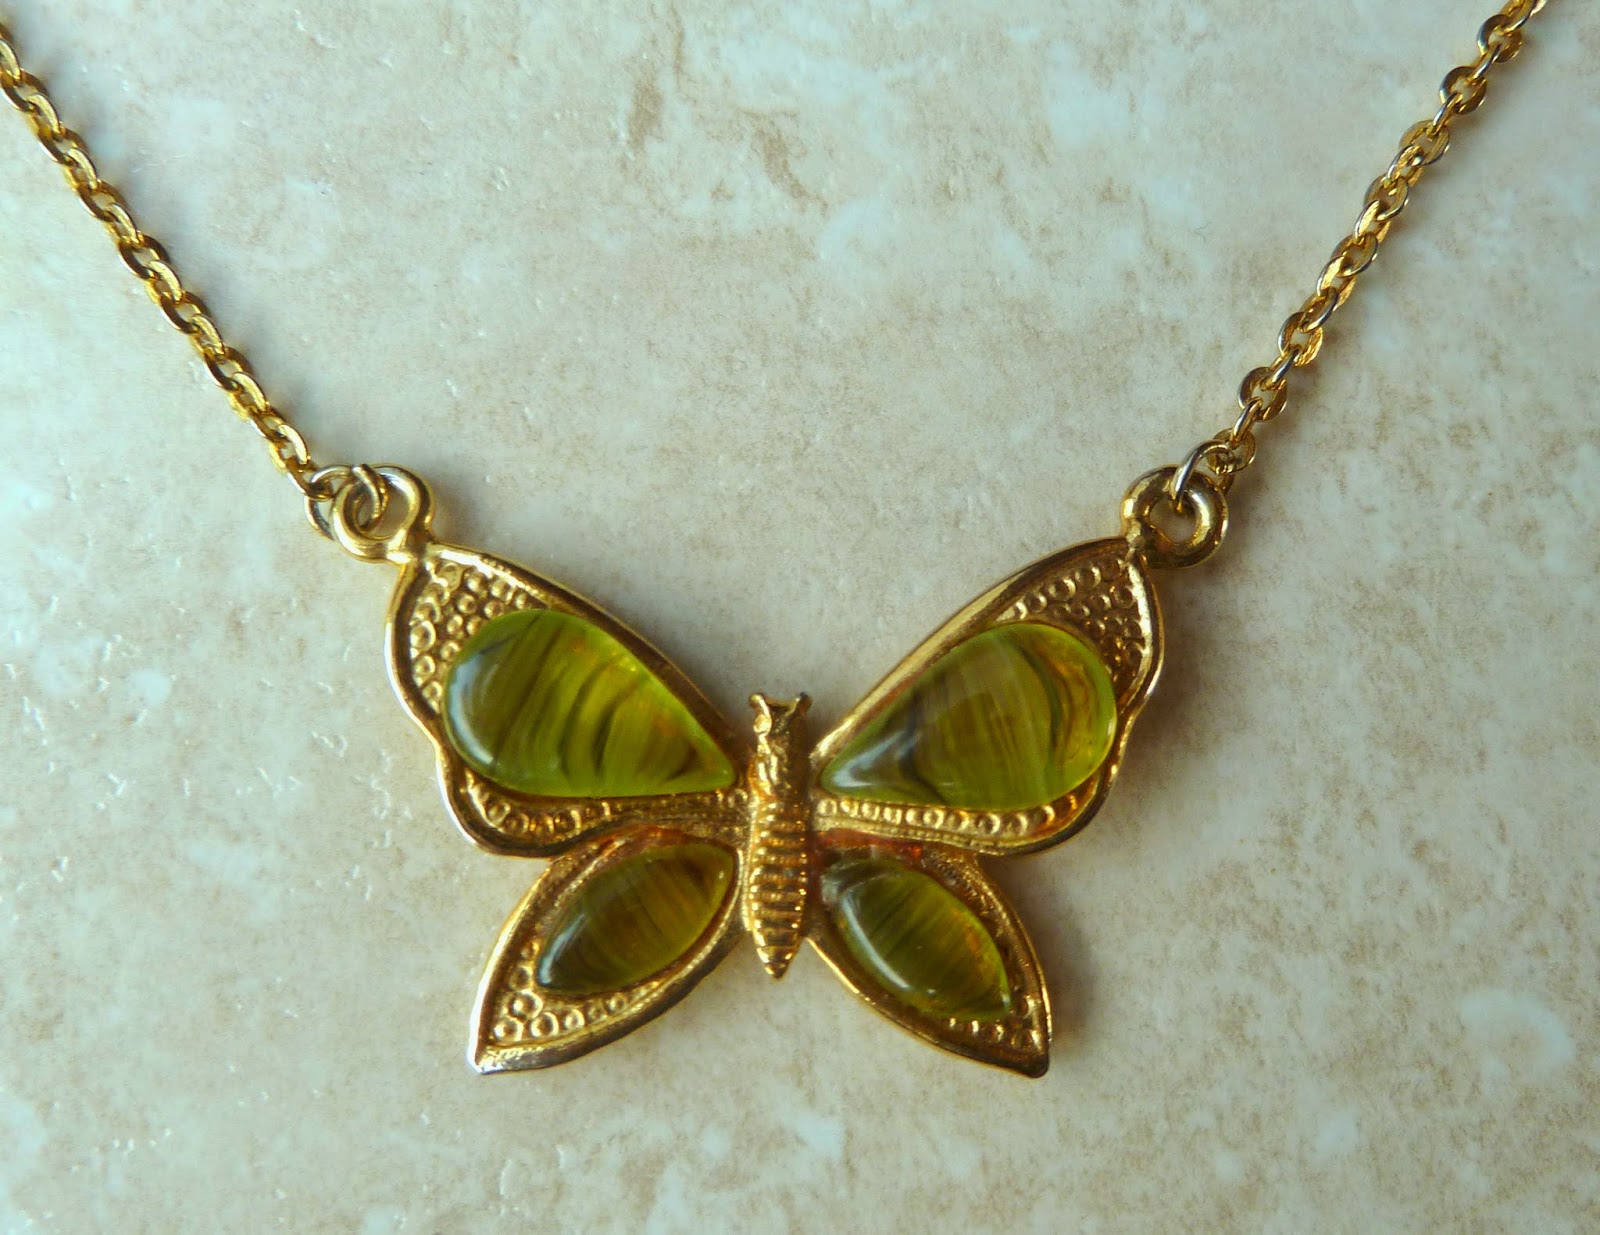 http://www.kcavintagegems.uk/vintage-butterfly-art-glass-choker-necklace-by-exquisite-349-p.asp